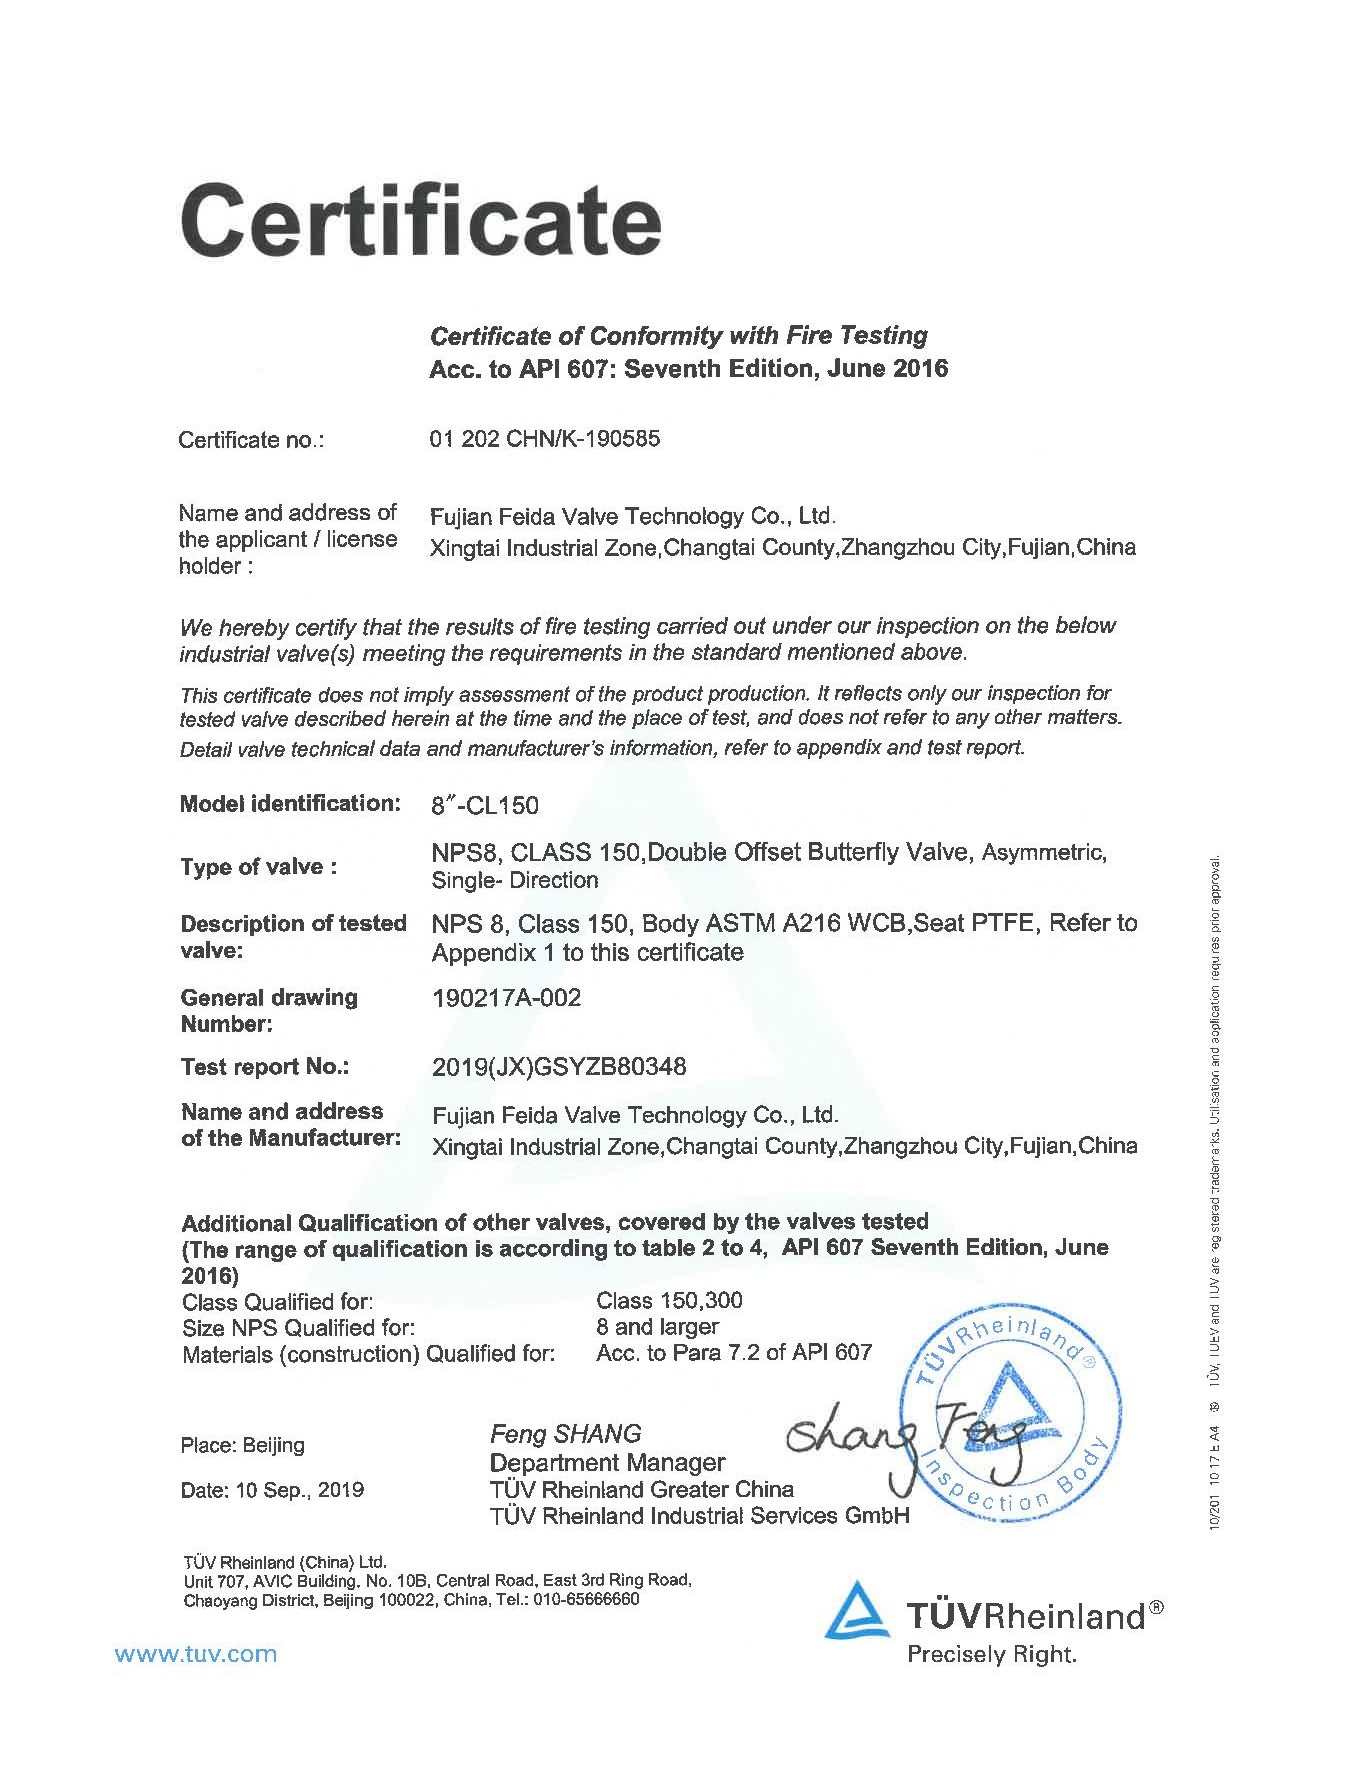 Certificat de sécurité incendie API 607
        